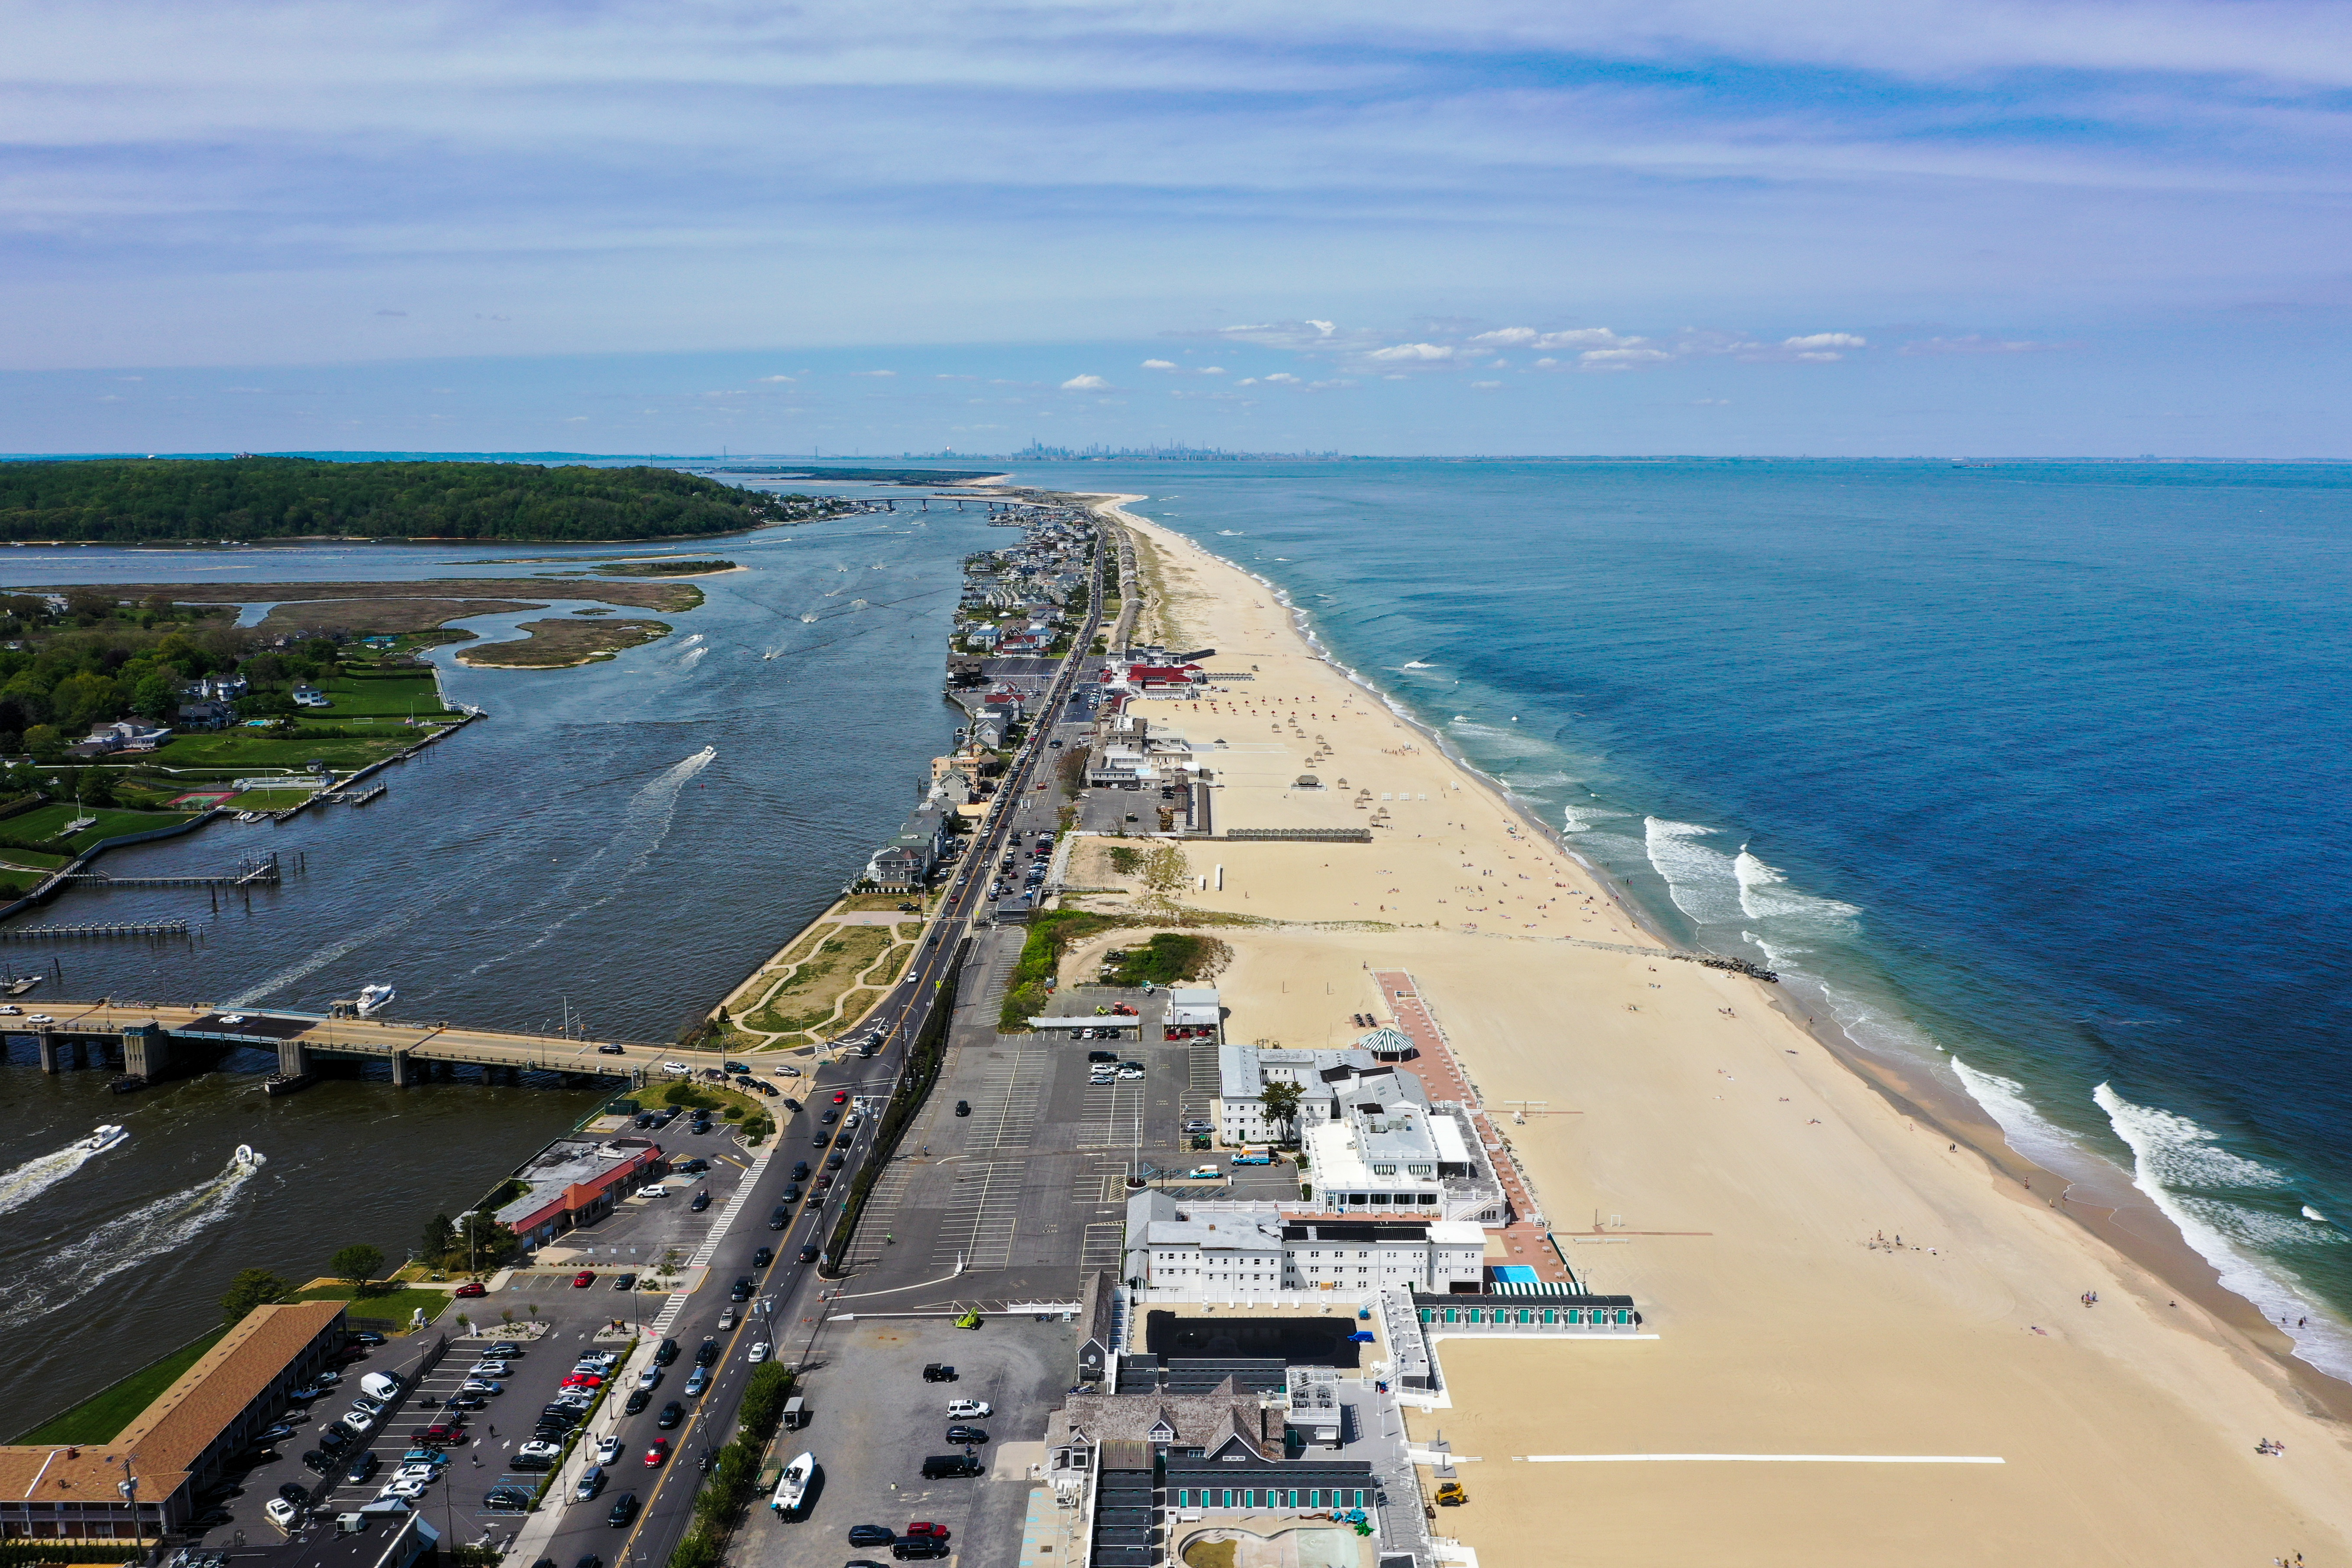 Monmouth County, NJ Beach Gets National Praise